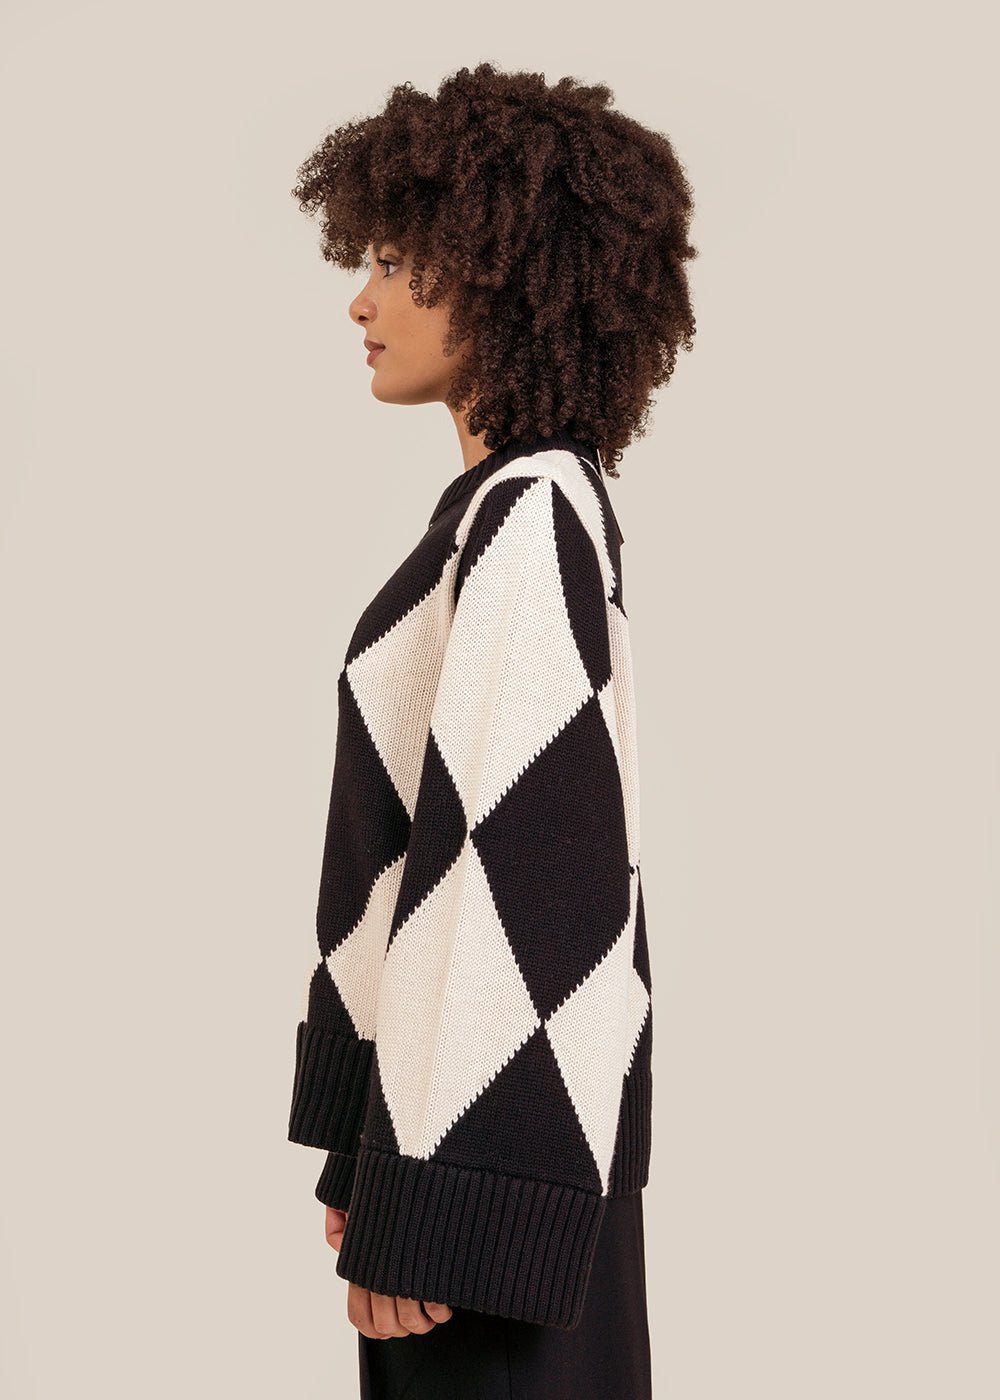 Stylein Black/White Aren Sweater - New Classics Studios Sustainable Ethical Fashion Canada